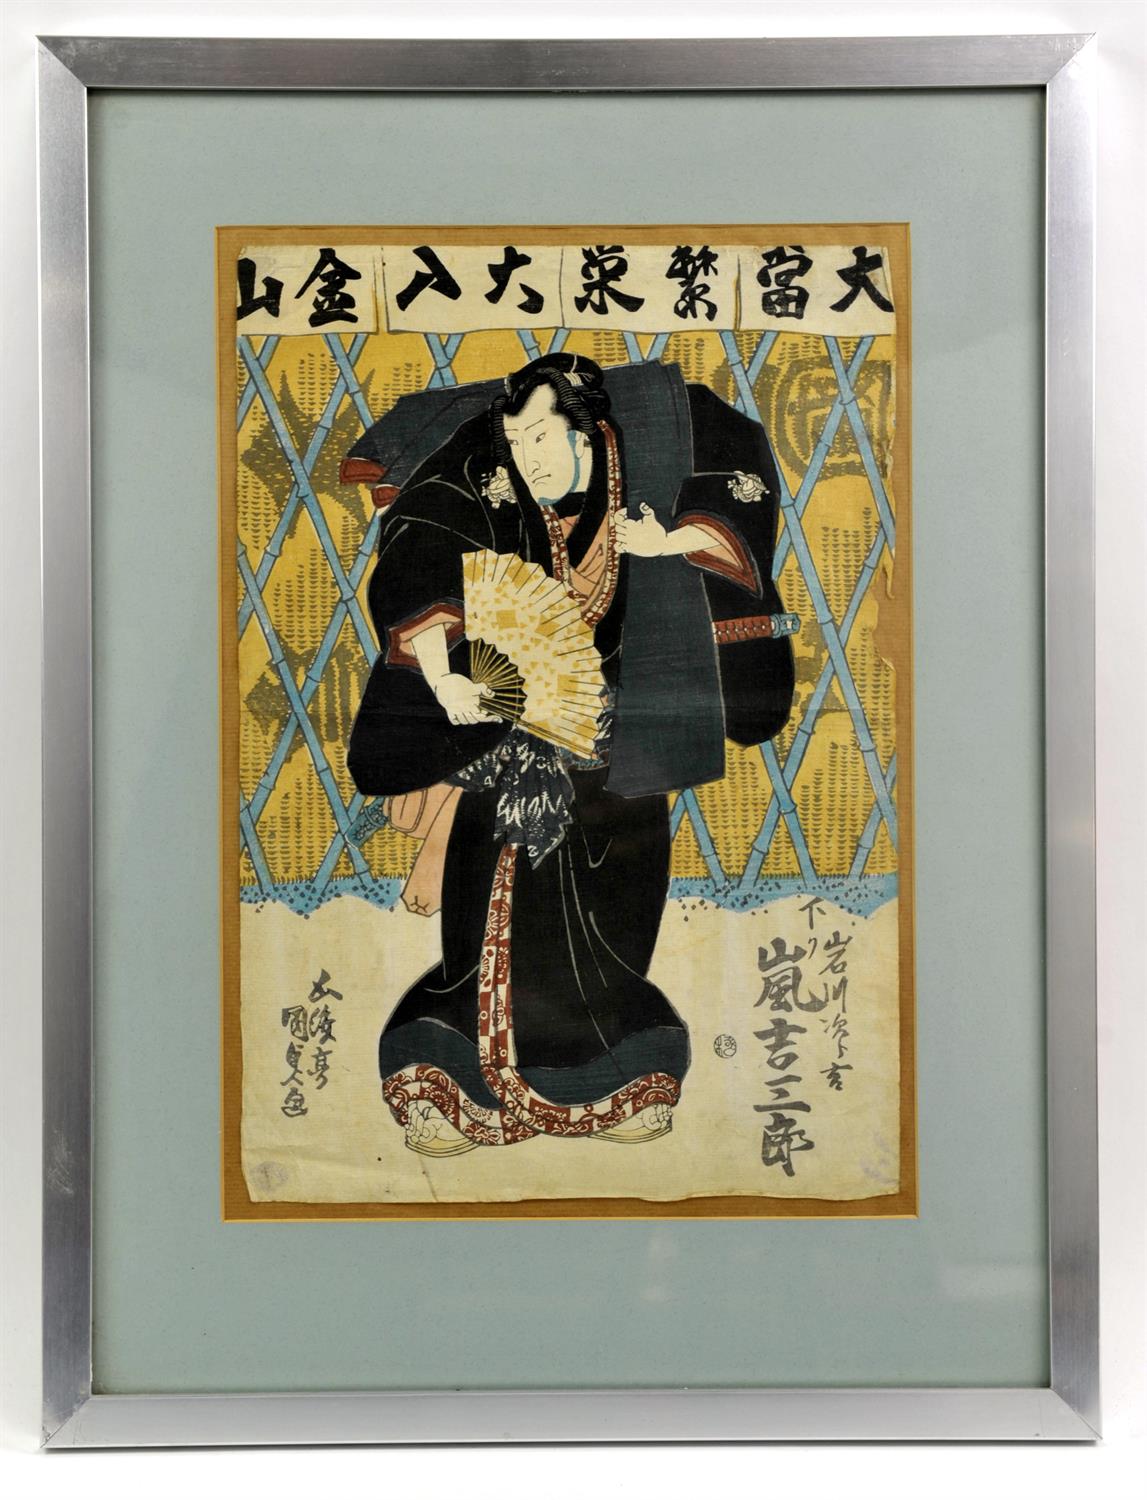 Seven framed and glazed oban tate-e, including: one by Utagawa Toyokuni III; one by Utagawa